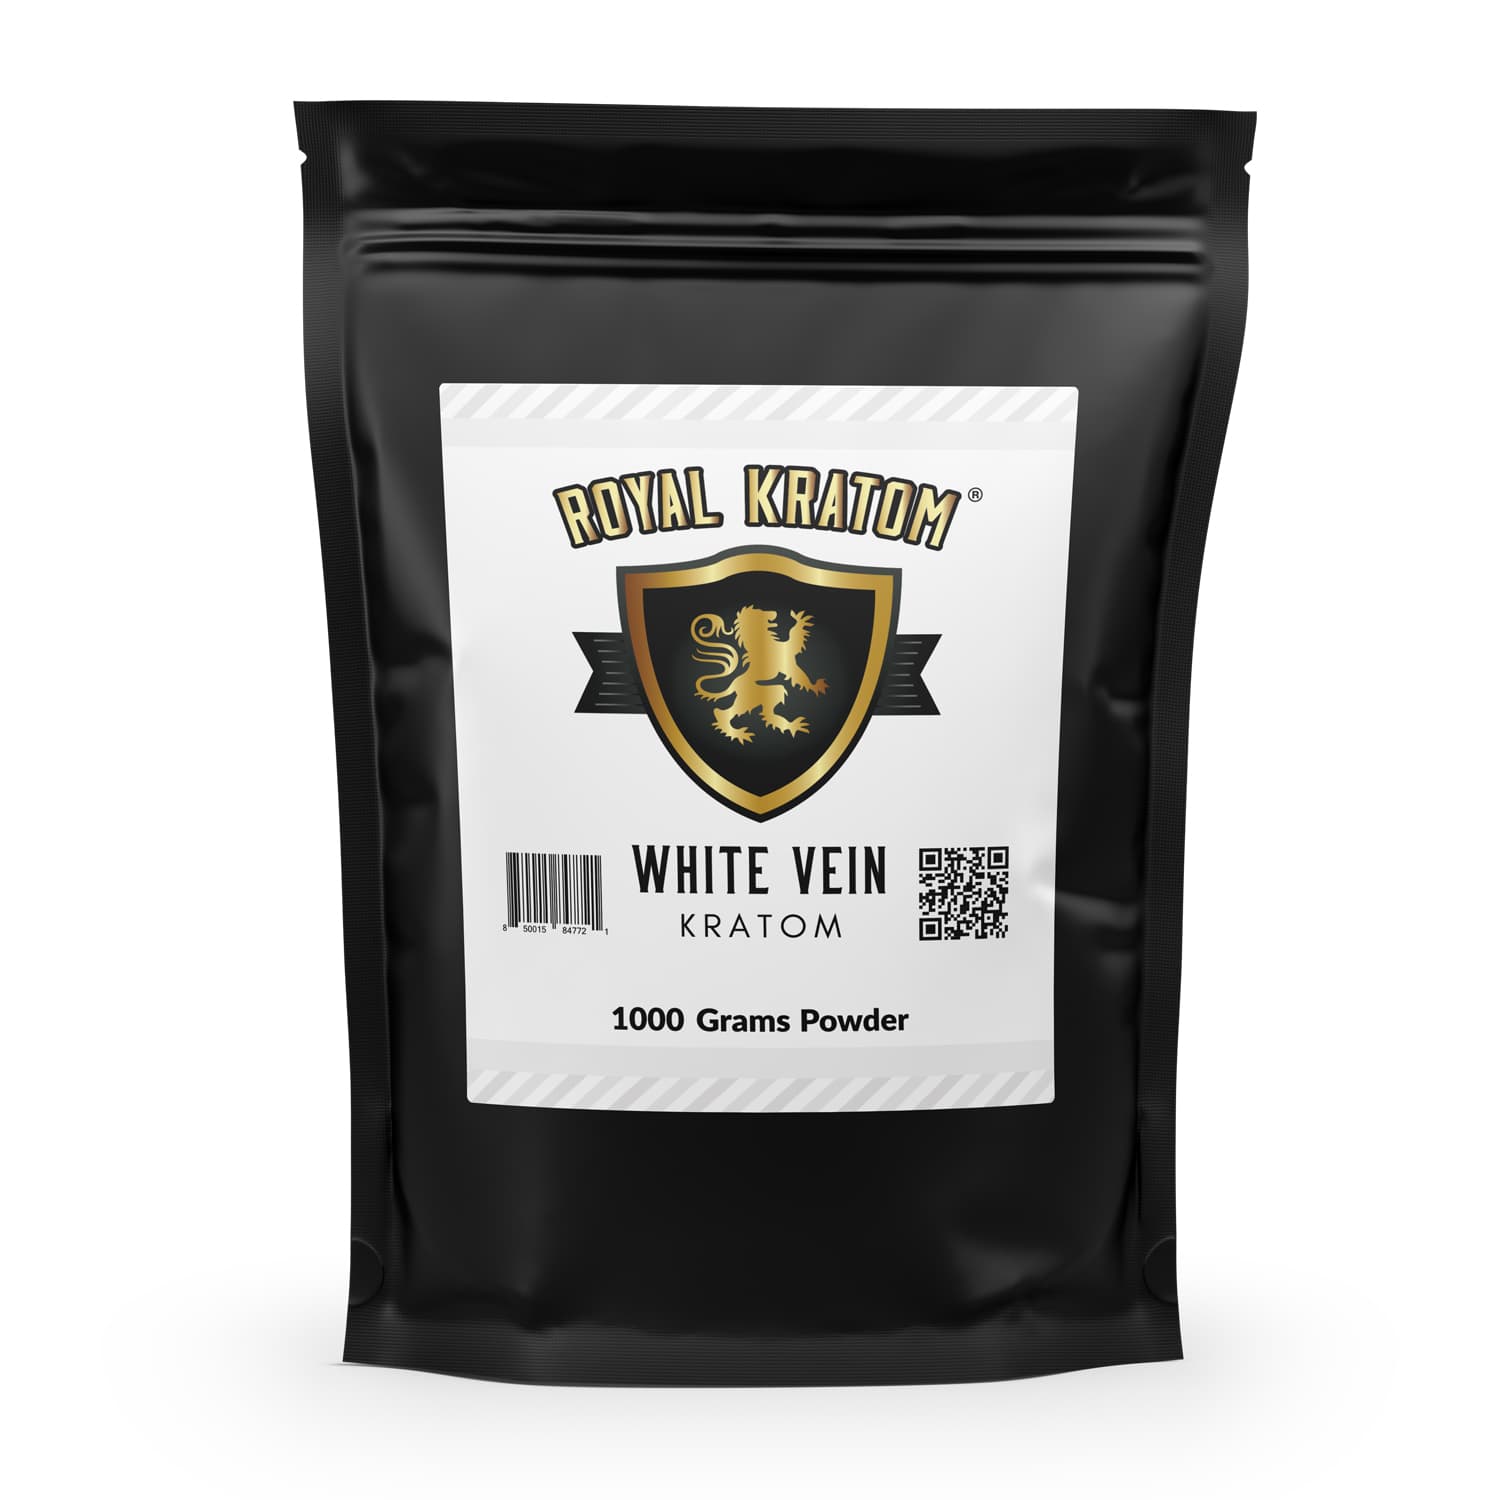 White Vein Kratom Powder 1000 Grams front of package